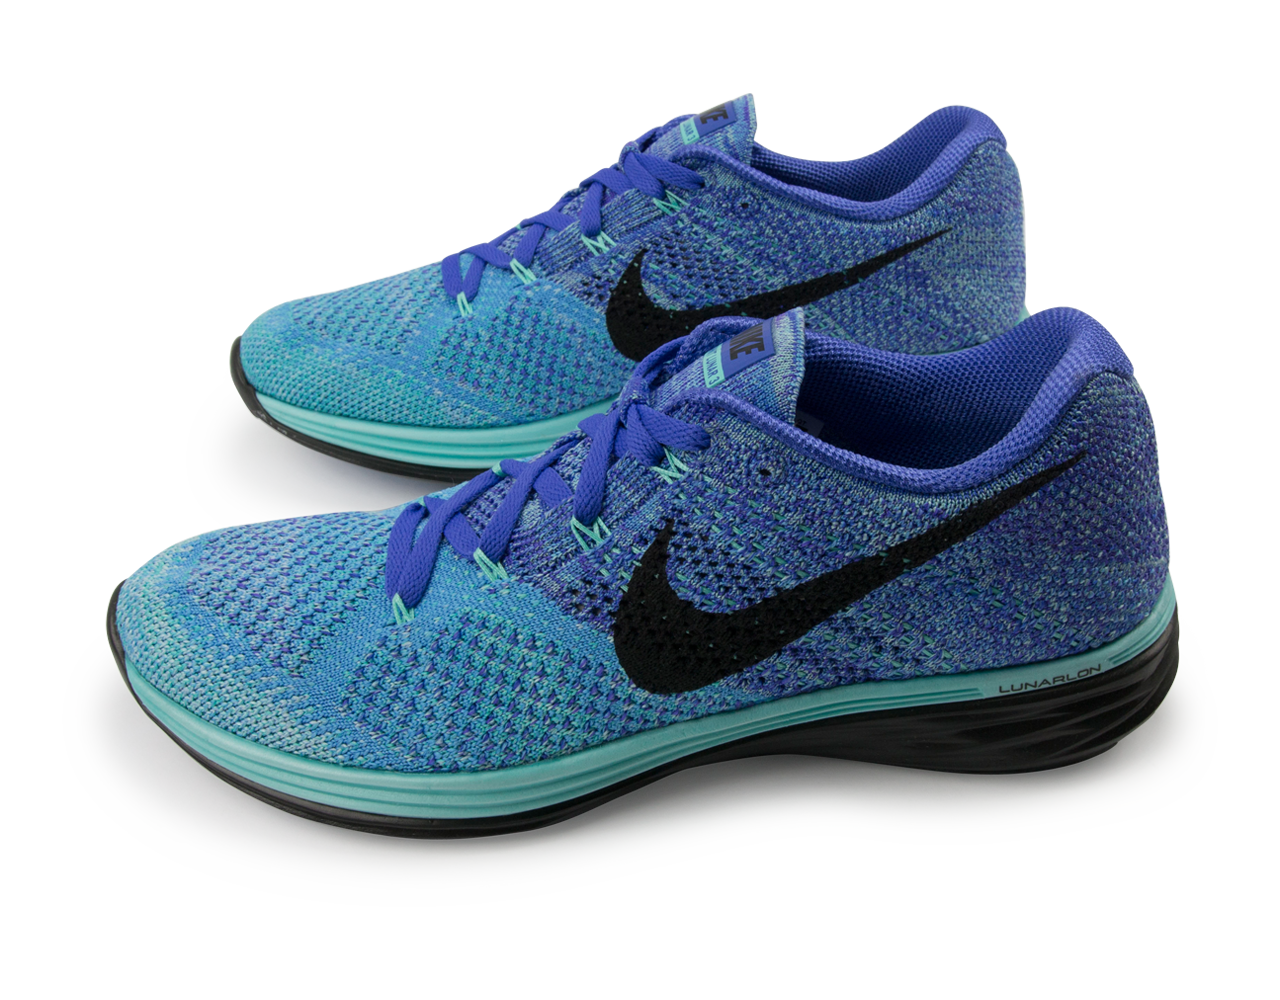 Nike Women's Flyknit Lunar 3 Running Shoes Light Aqua/Persian Violet/University Blue